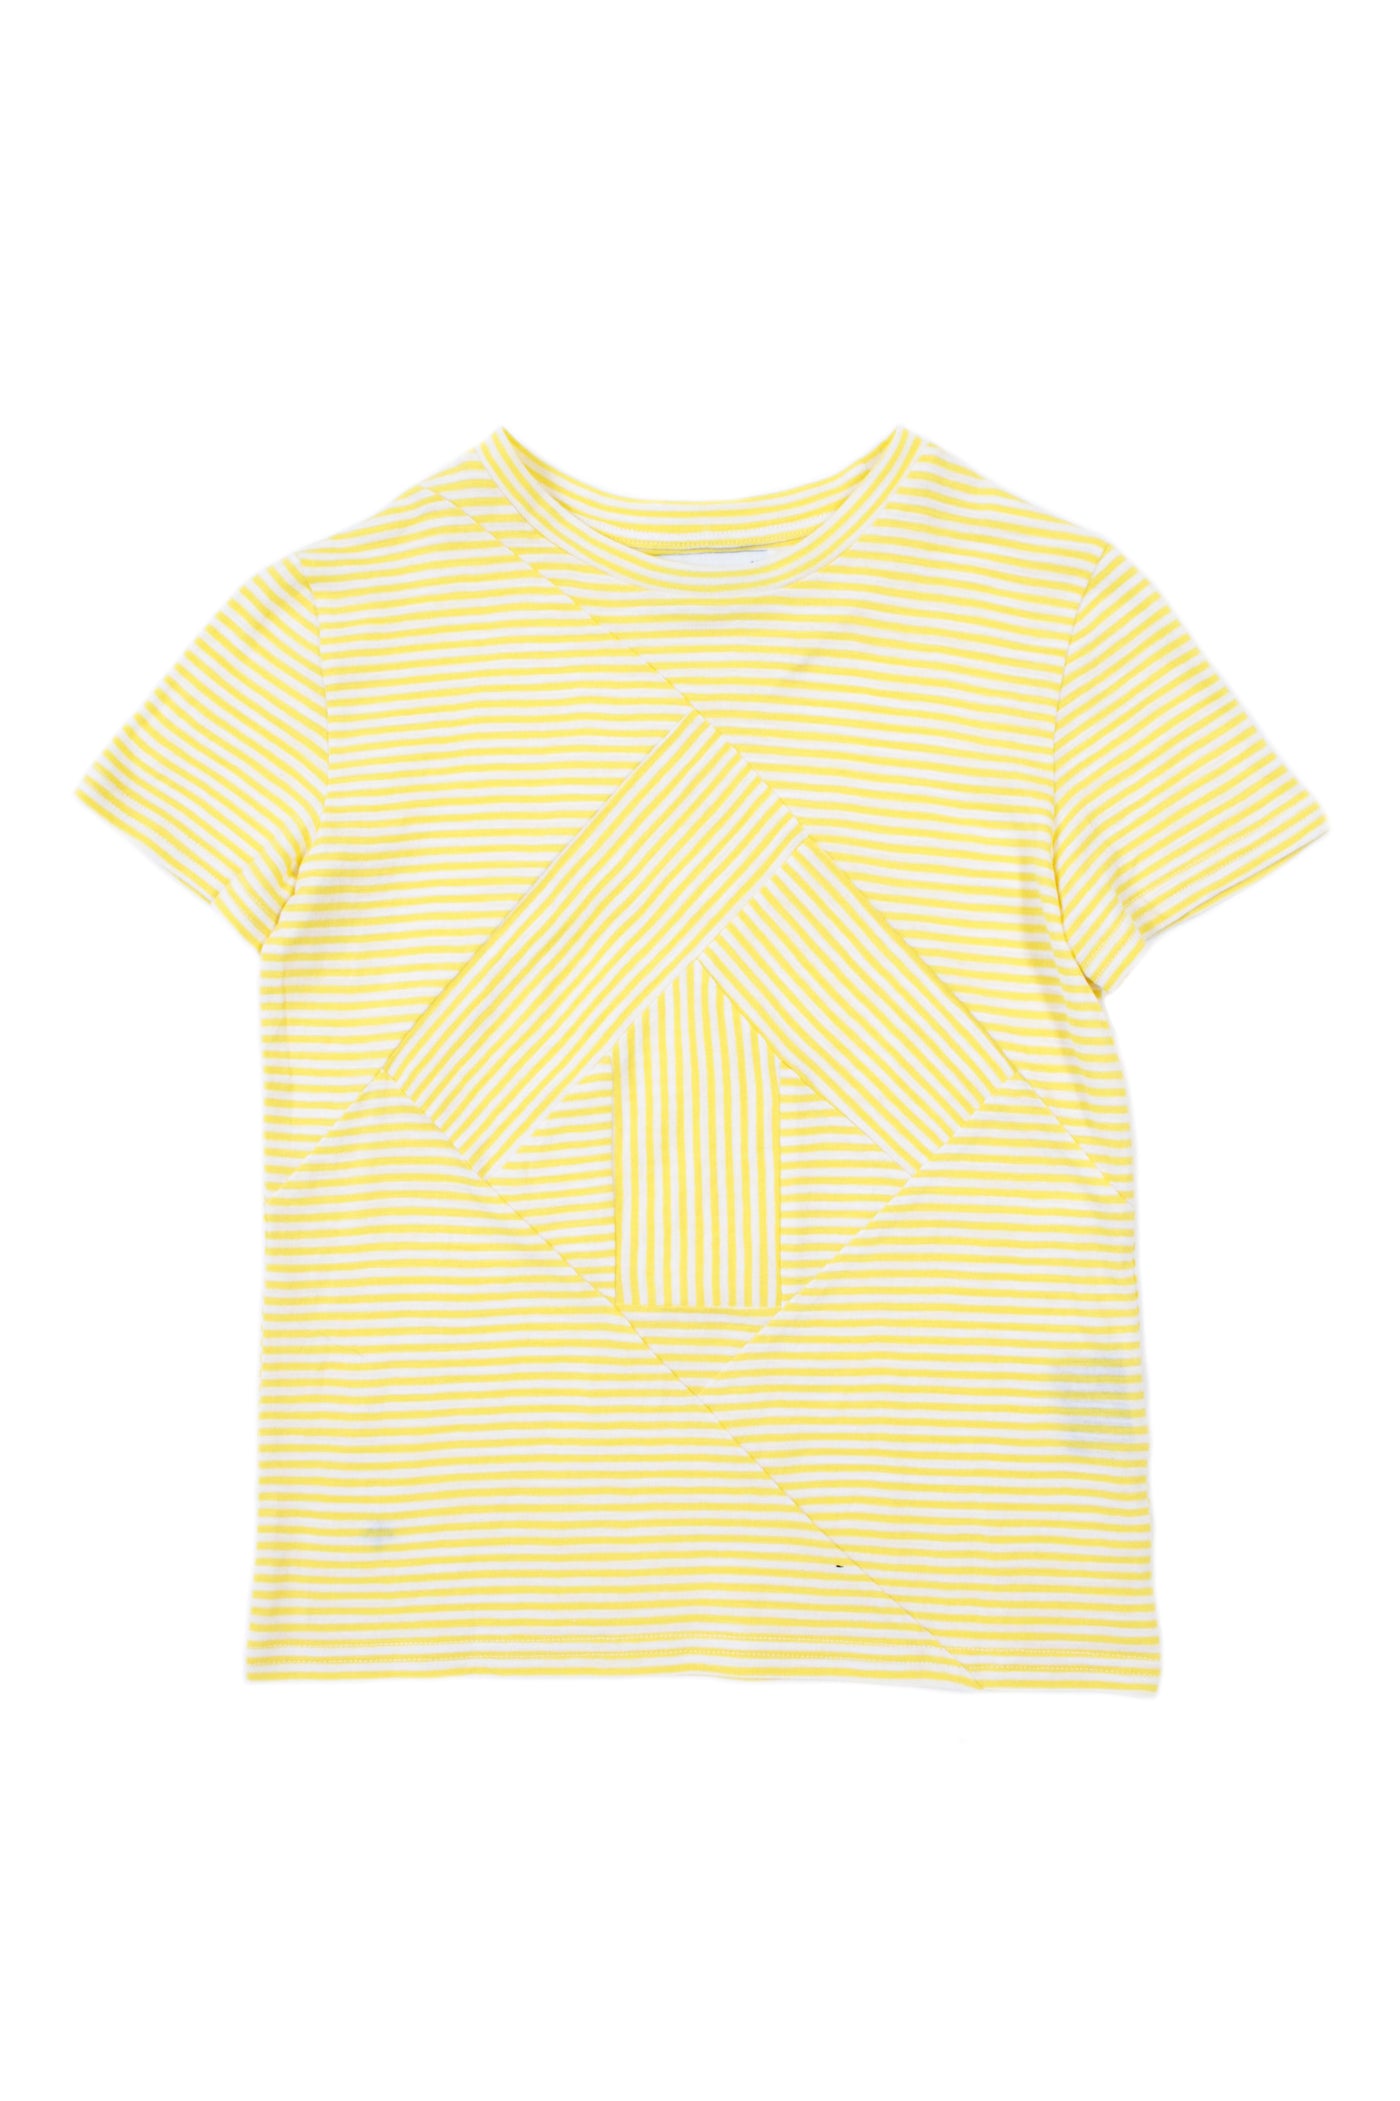 Up-shirt for kids | Yellow striped - Reet Aus